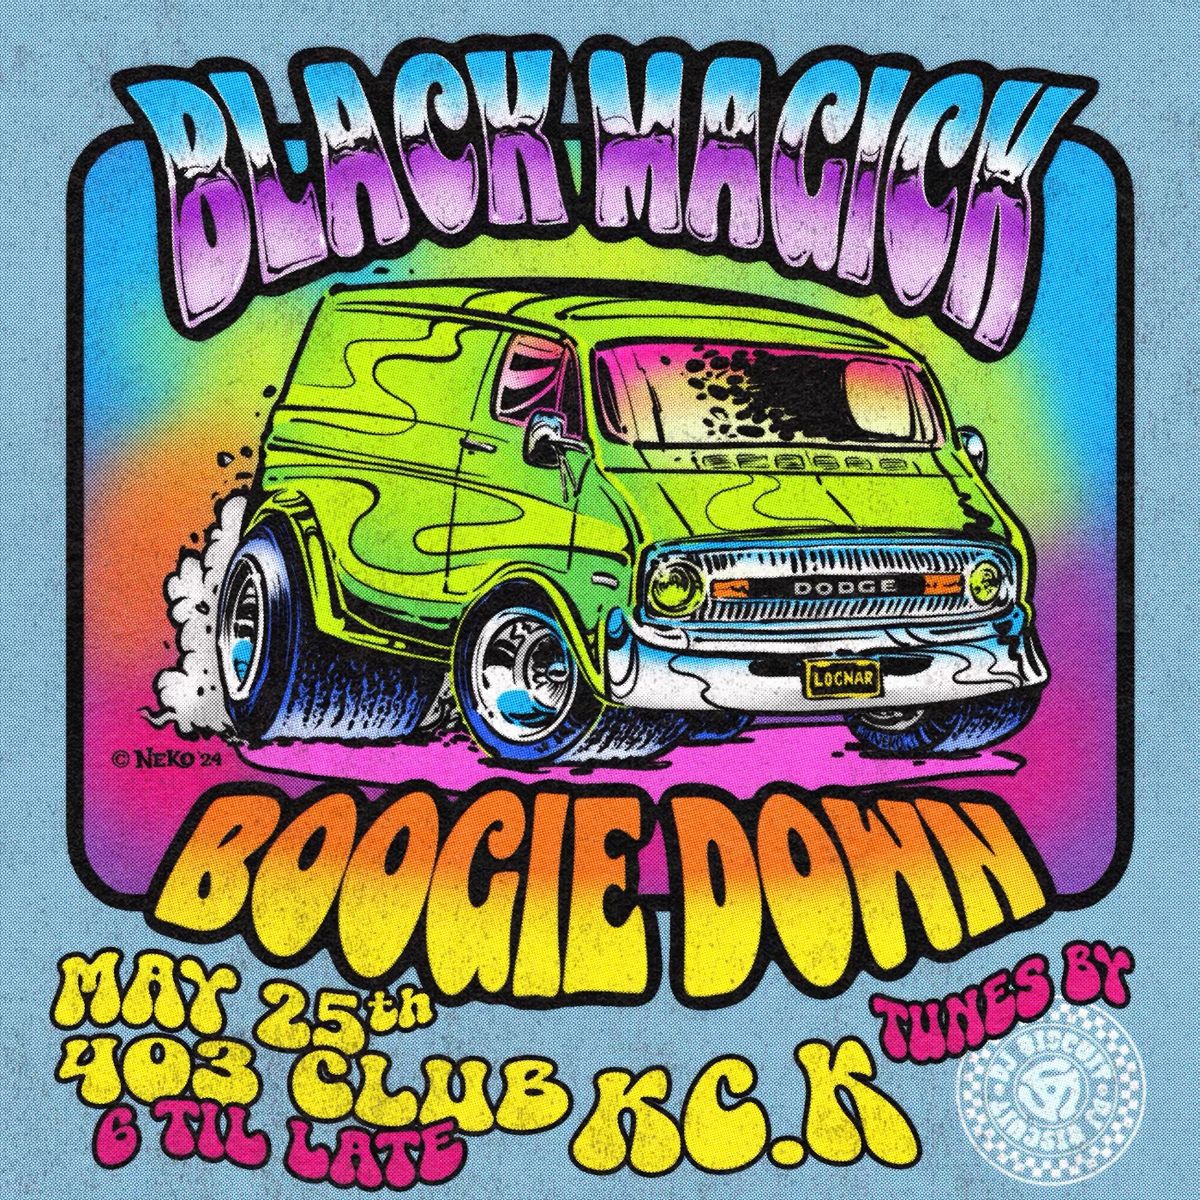 Black Magick Boogie Down